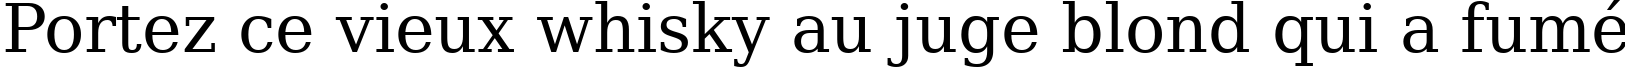 Пример написания шрифтом ae_Petra текста на французском